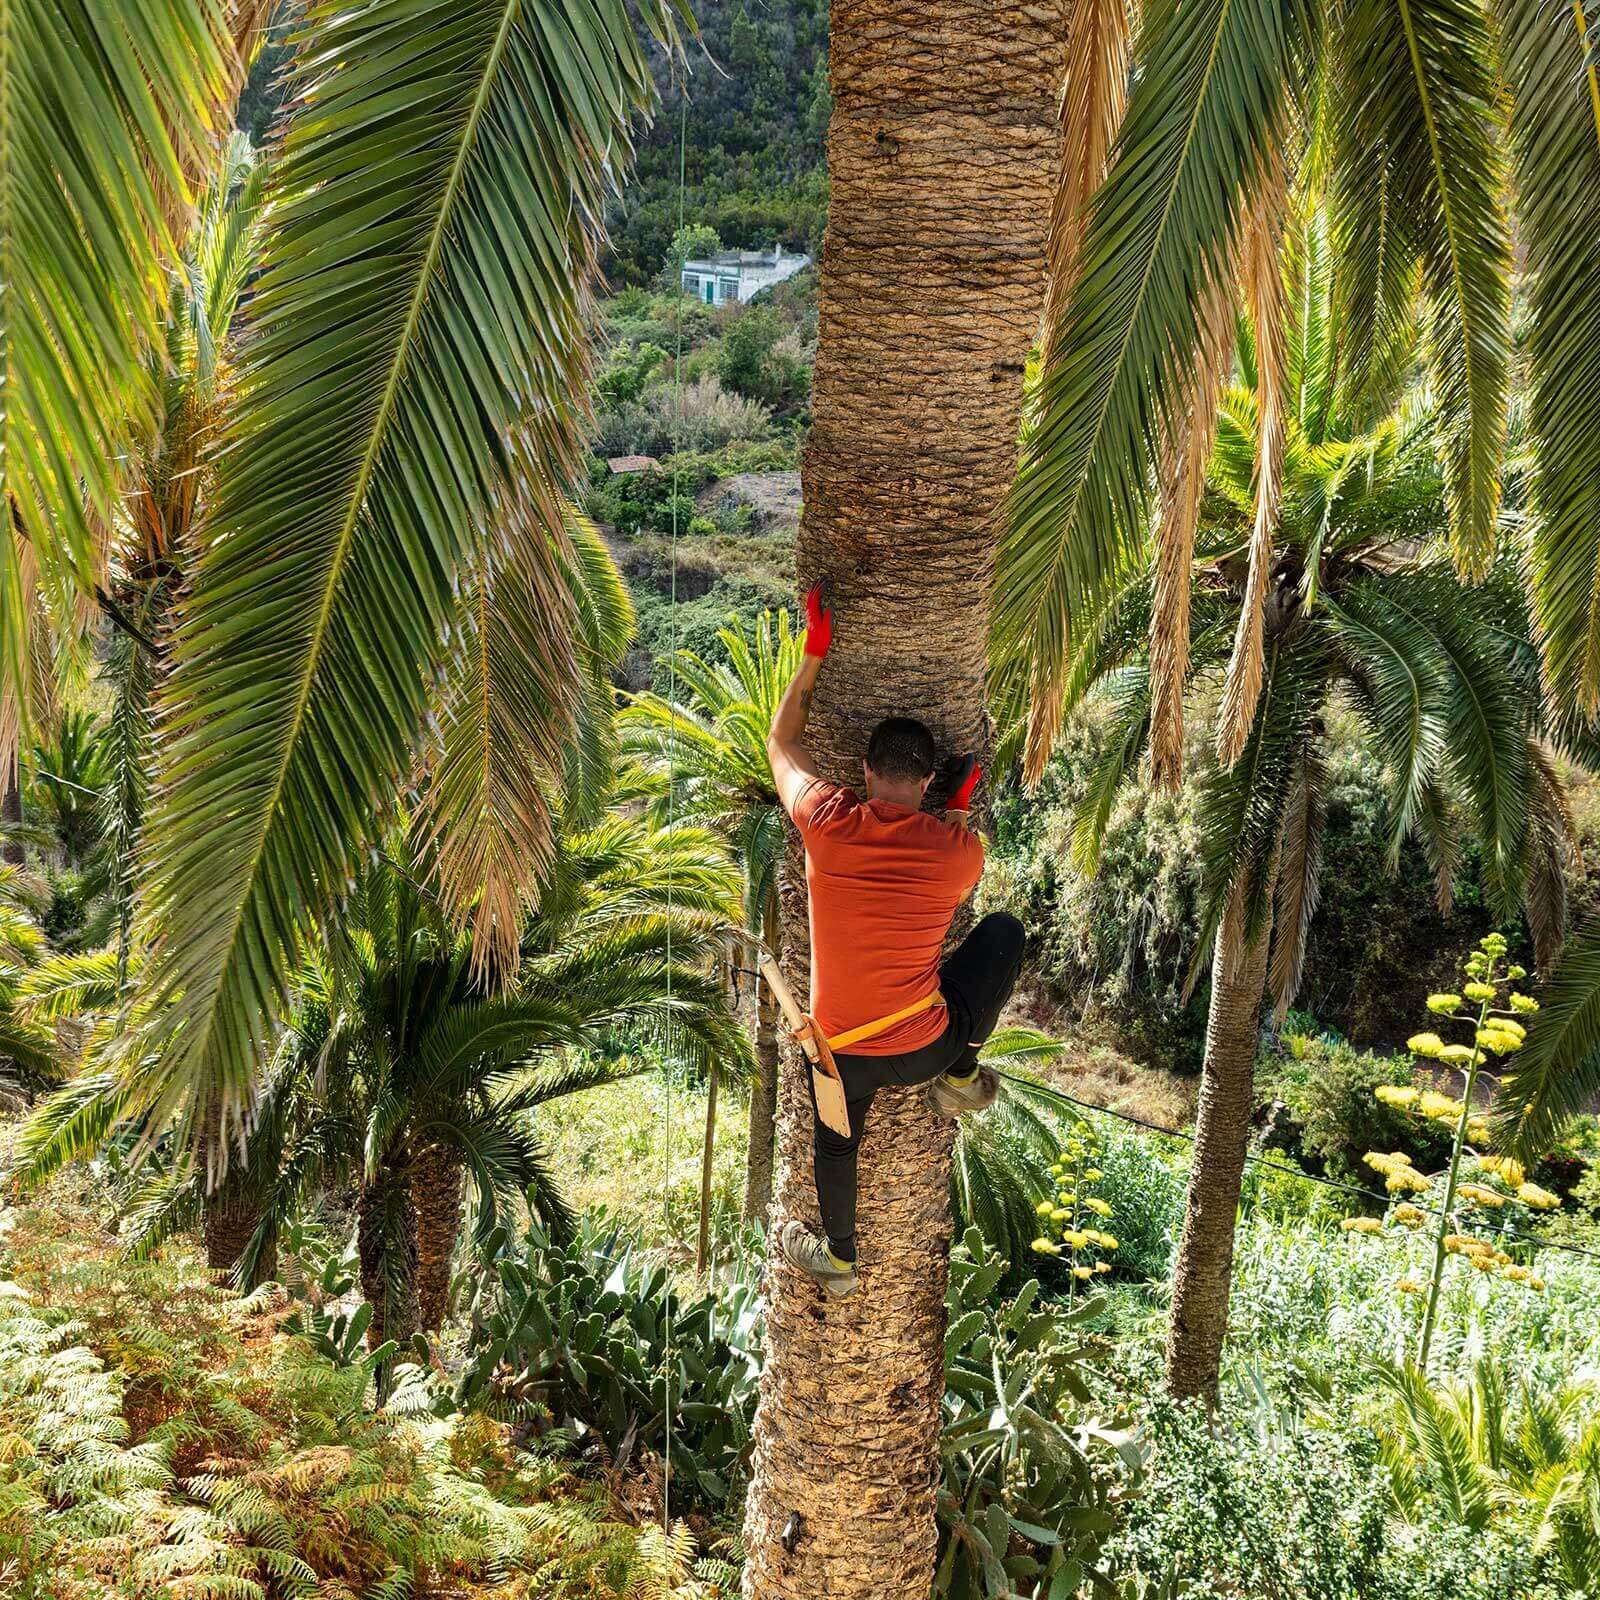 Kanariska palmen. ”Palmhonung”